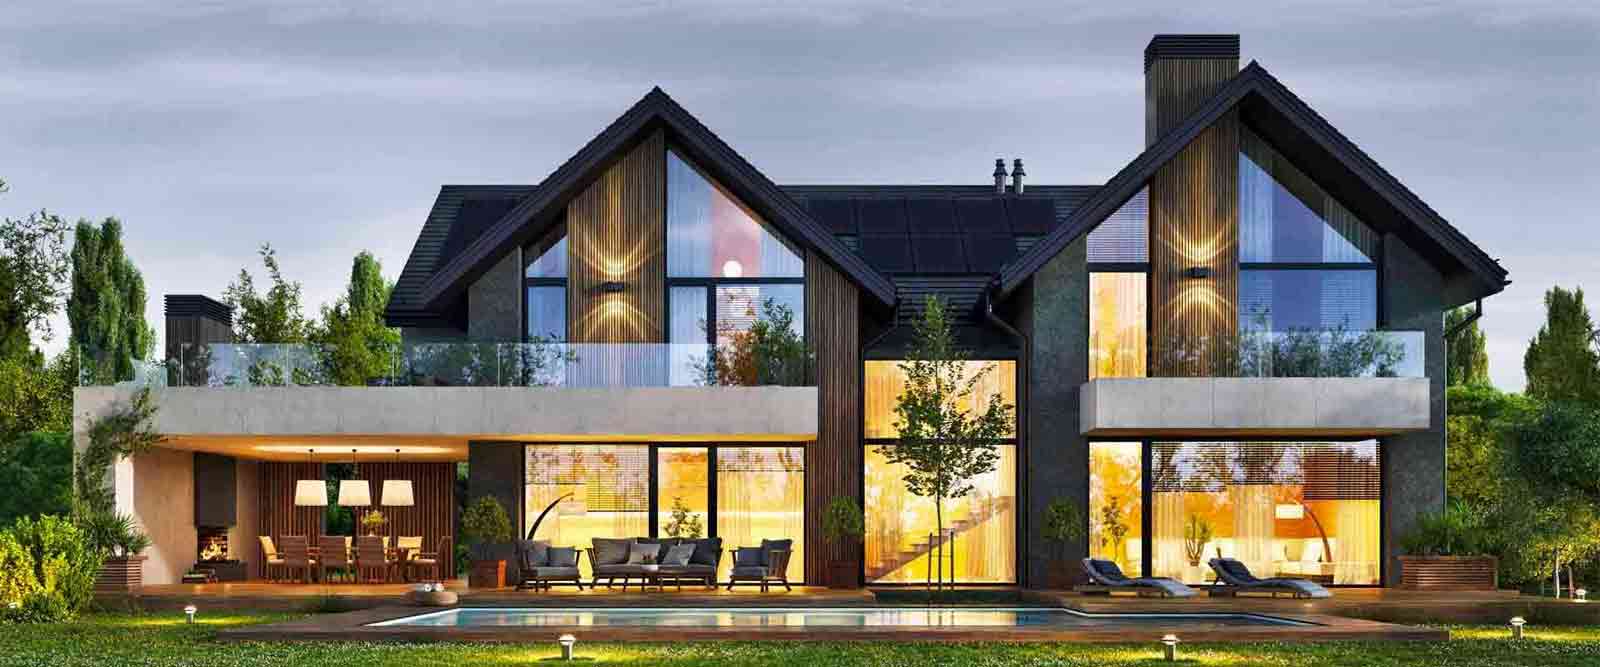 house using solar panels